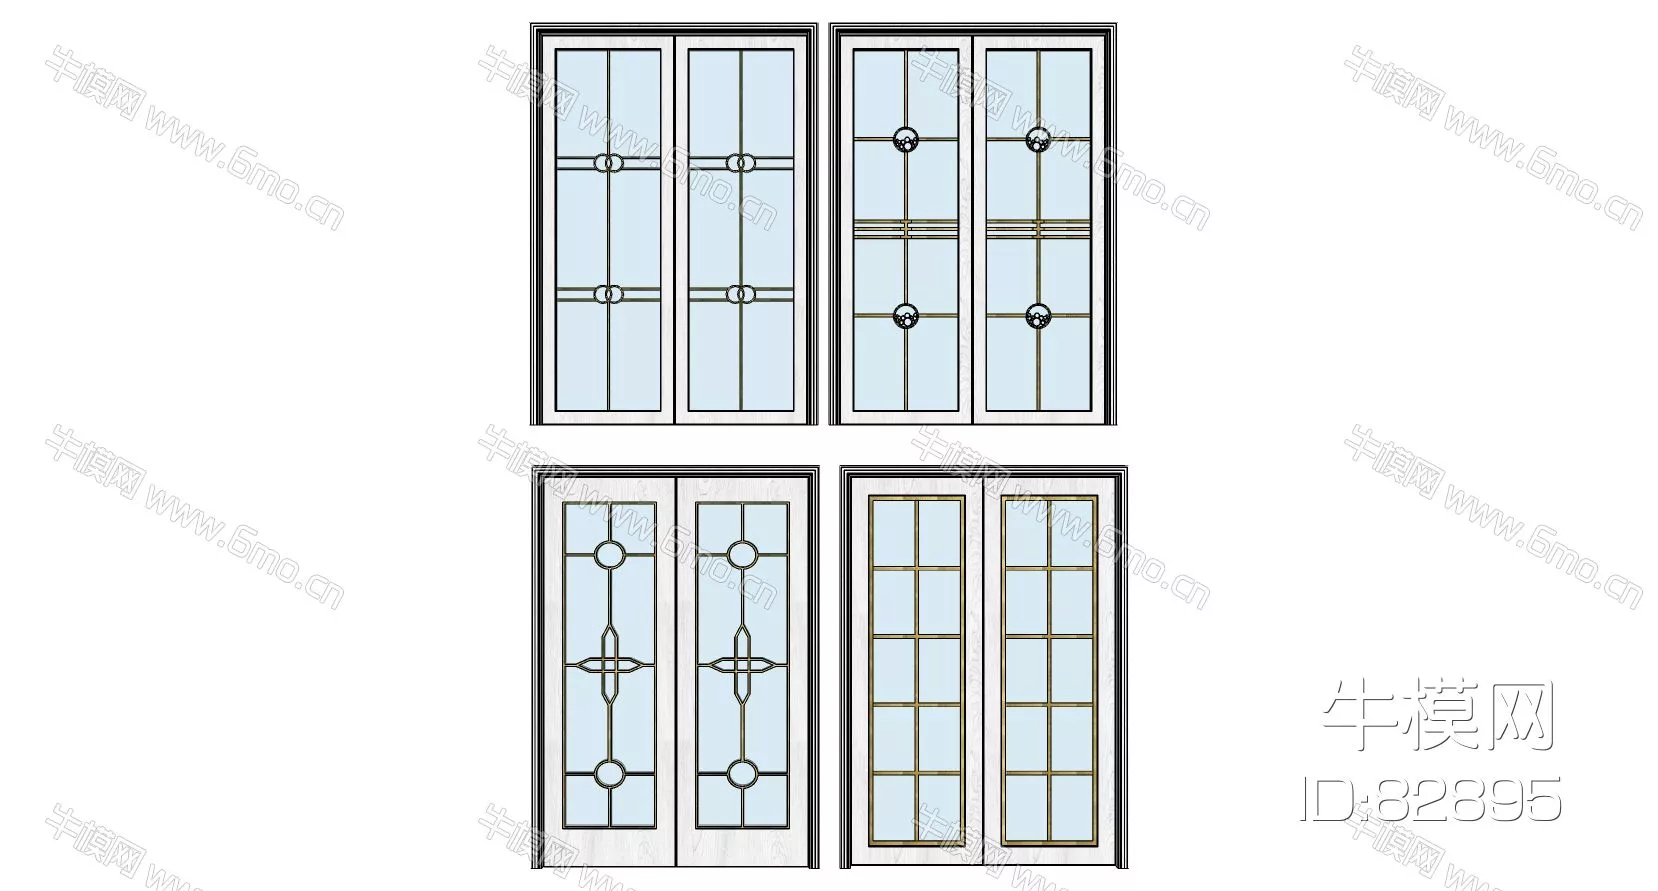 MODERN DOOR AND WINDOWS - SKETCHUP 3D MODEL - ENSCAPE - 82895